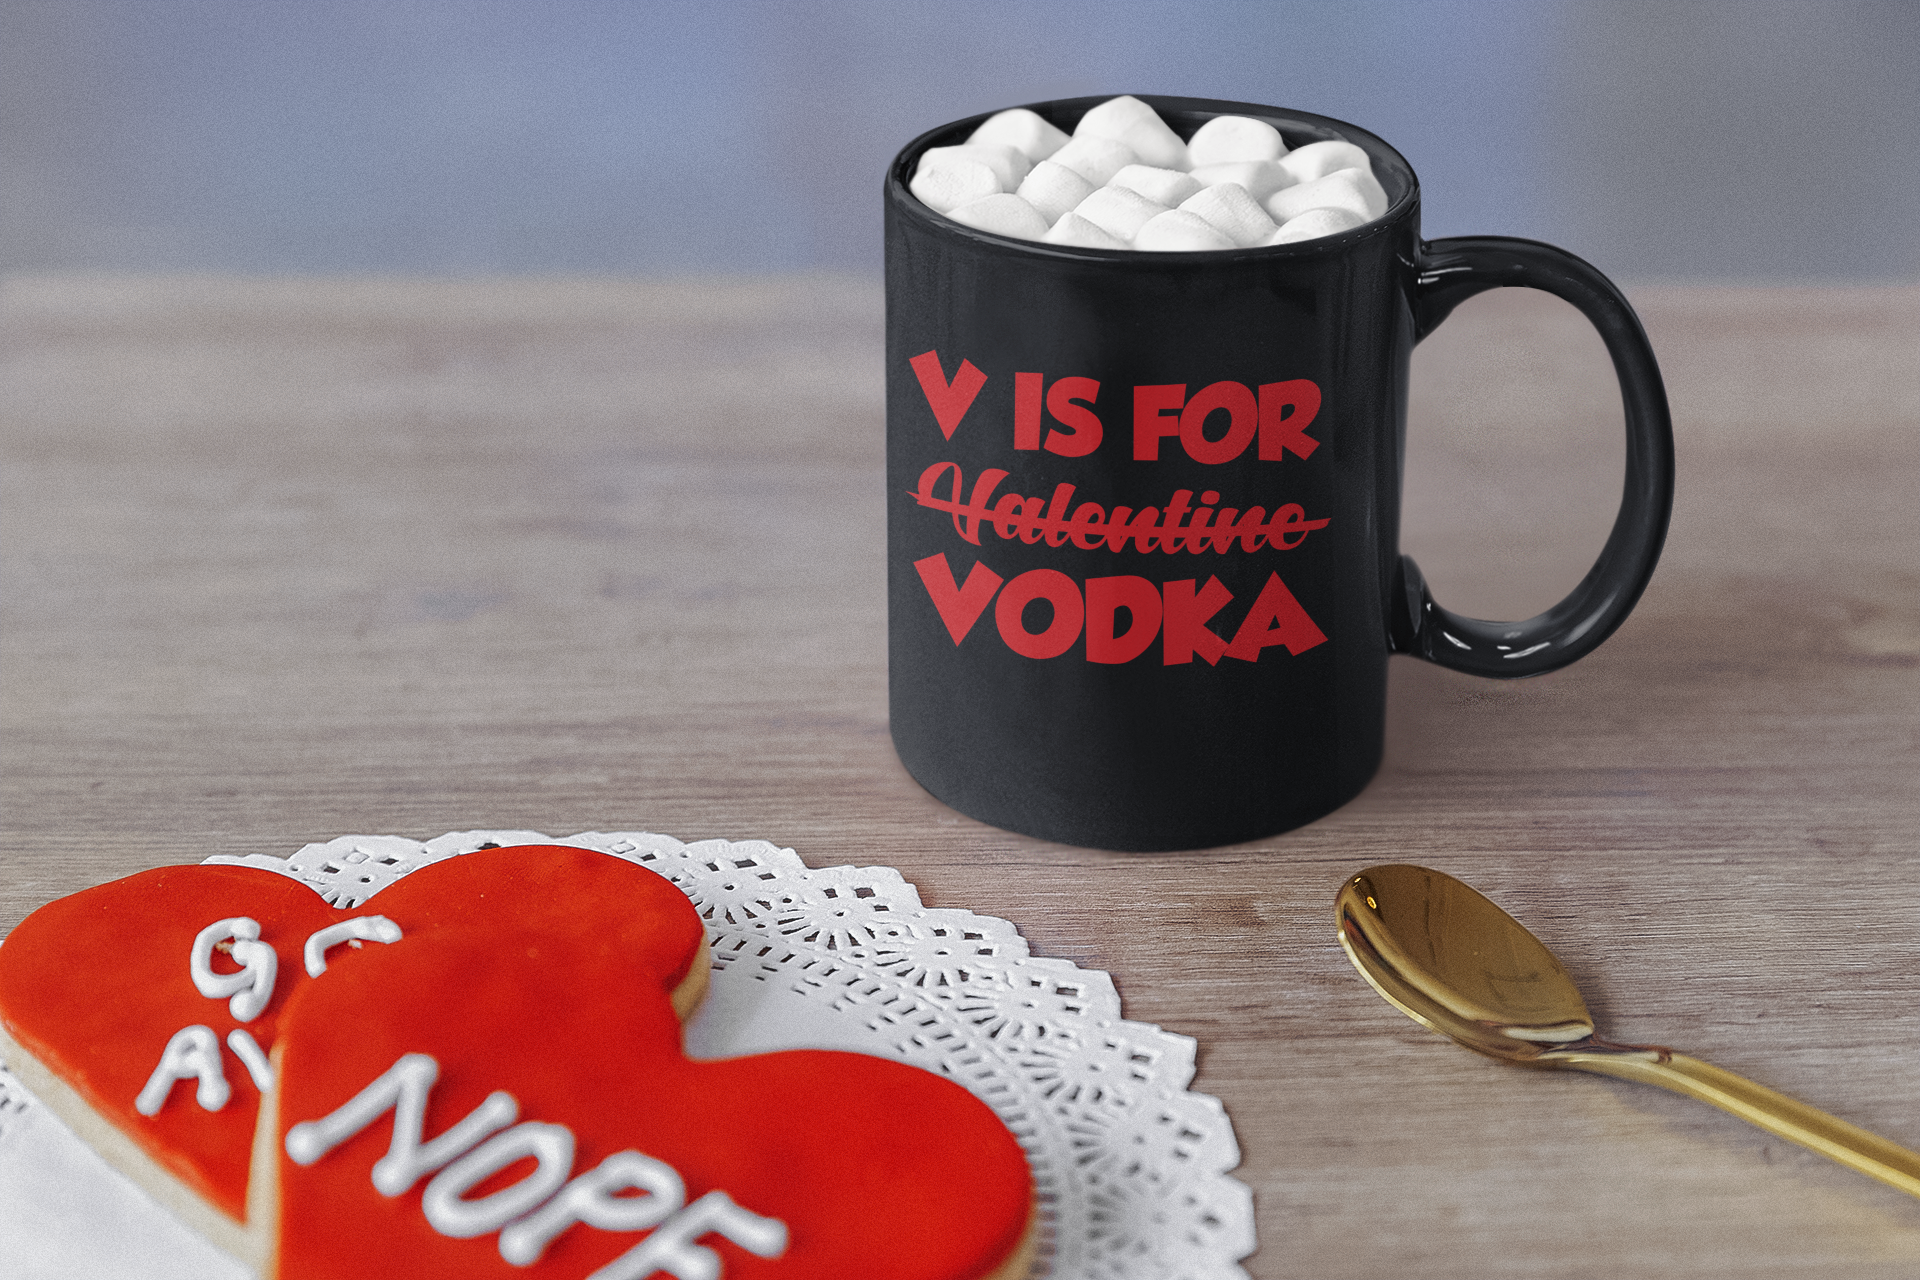 Black mug with red letters "V is for vodka" instead of Valentine